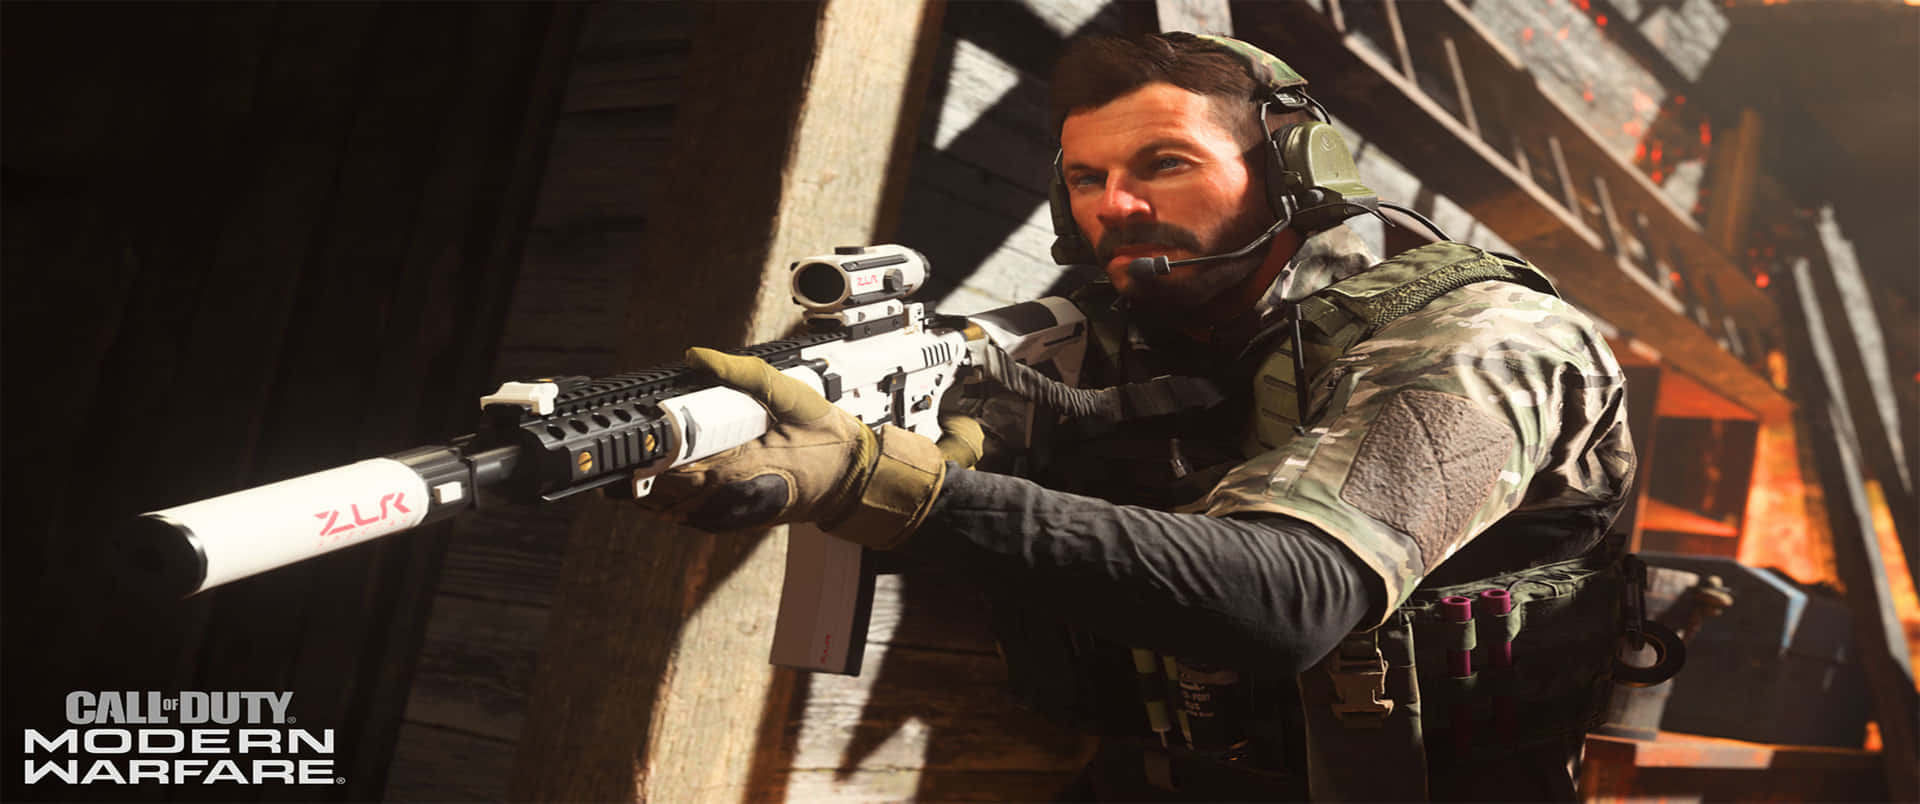 Alexkeller Sfondo Call Of Duty Modern Warfare 3440x1440p